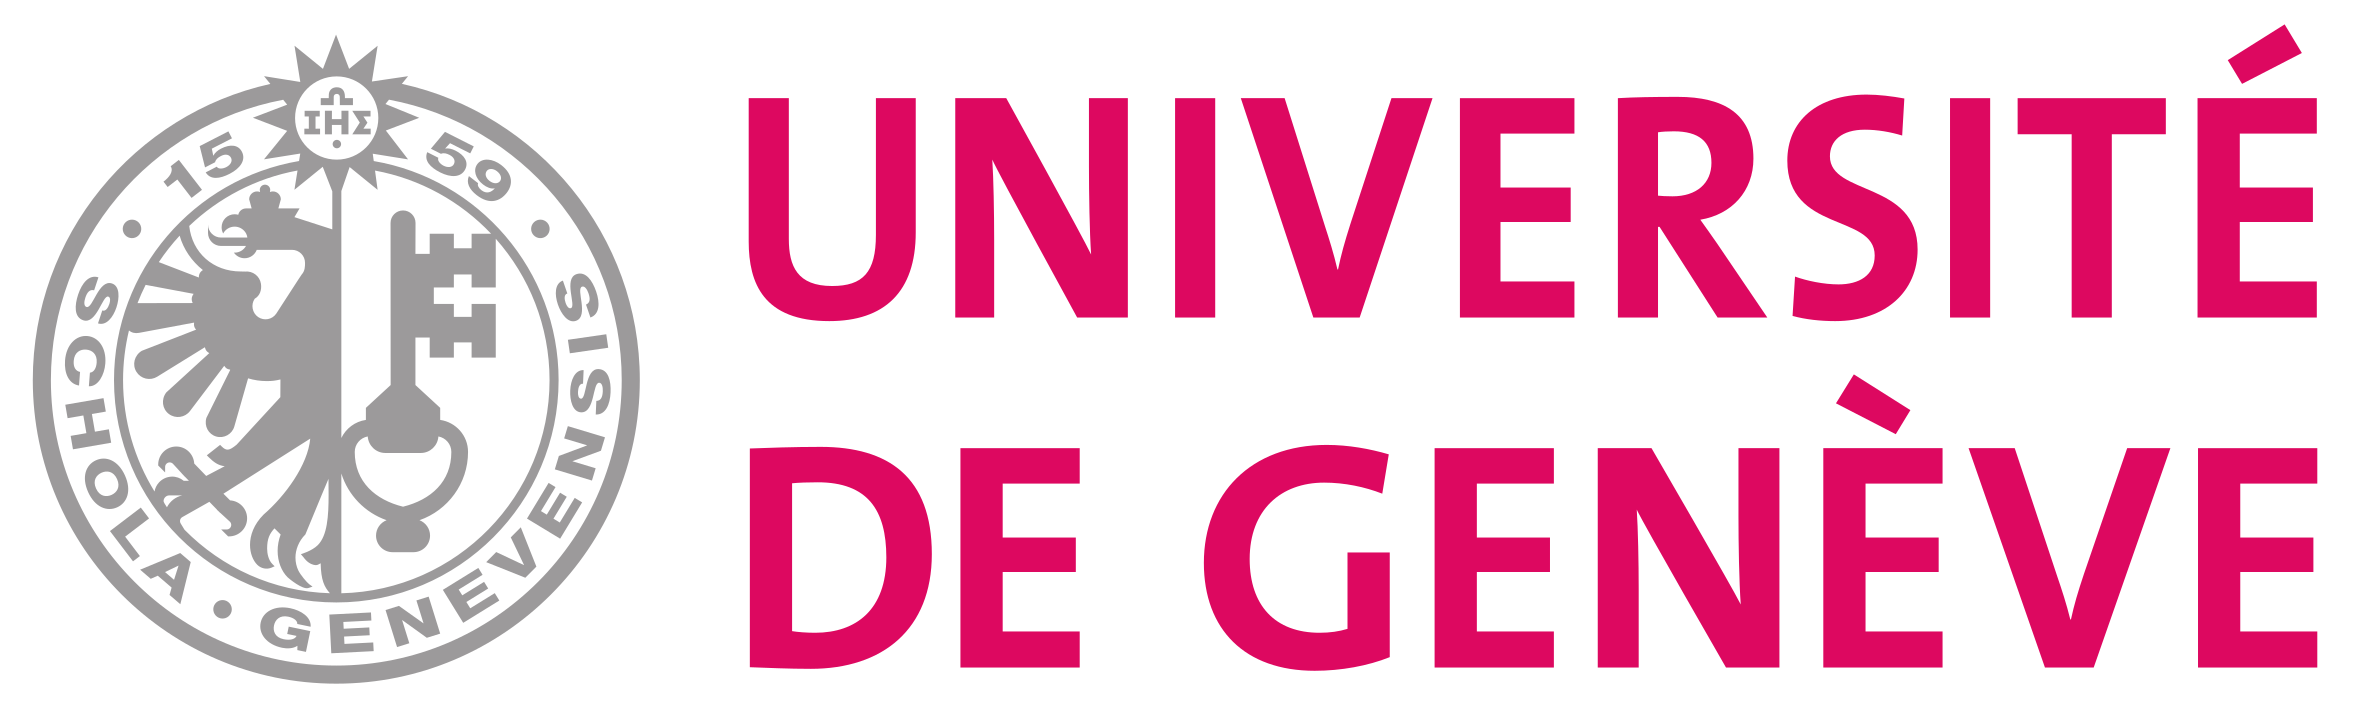 University of Geneva's logo